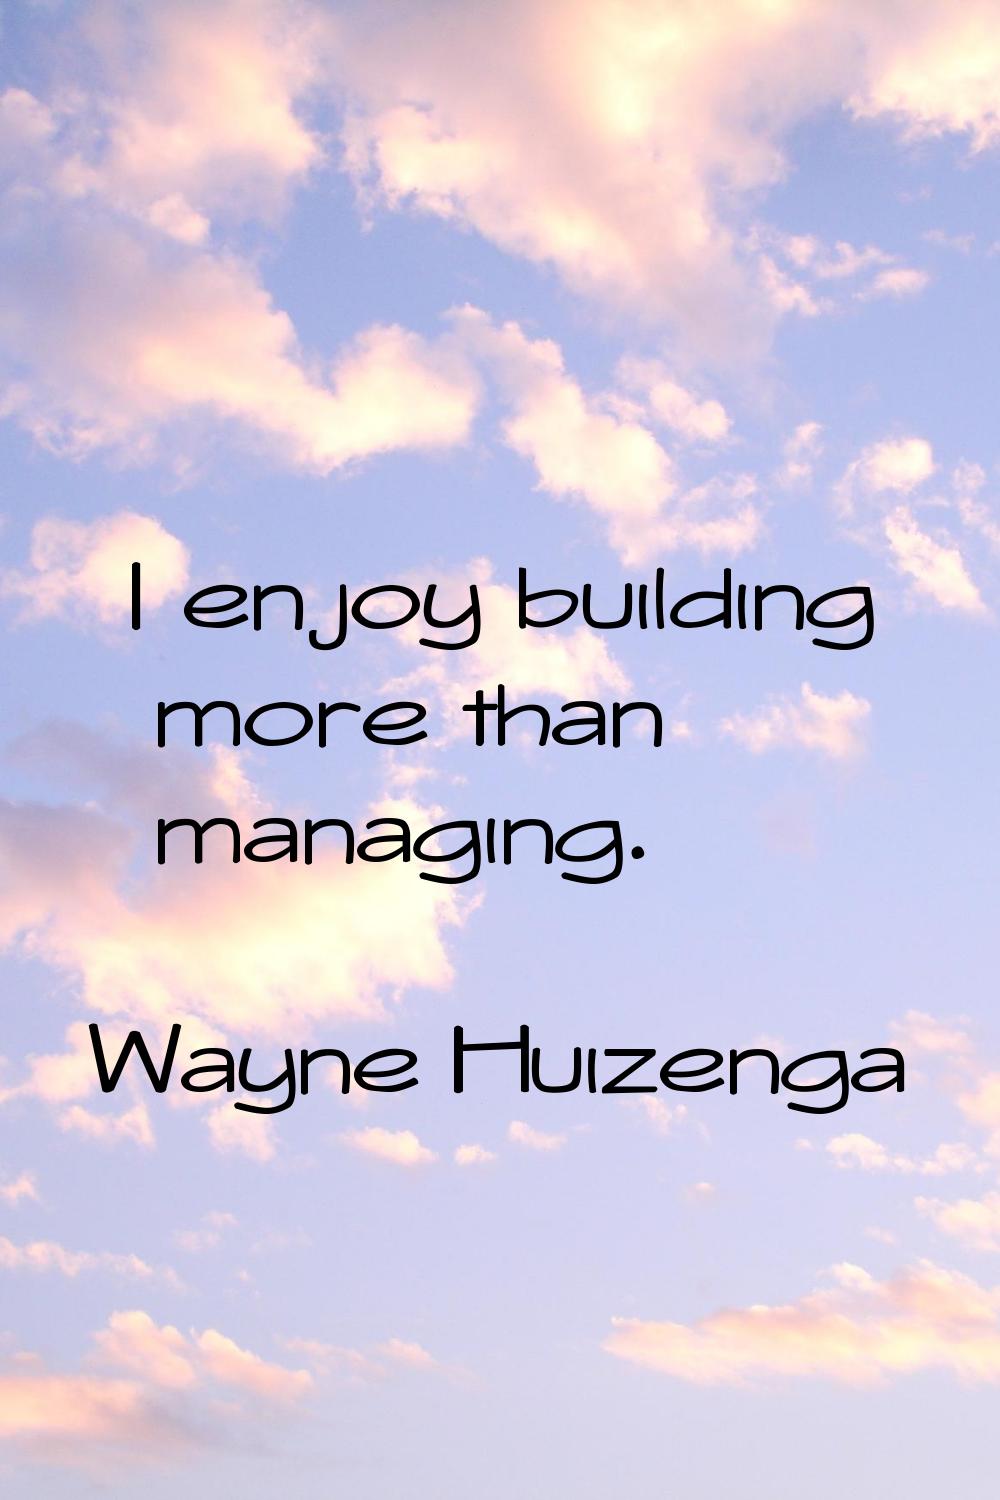 I enjoy building more than managing.